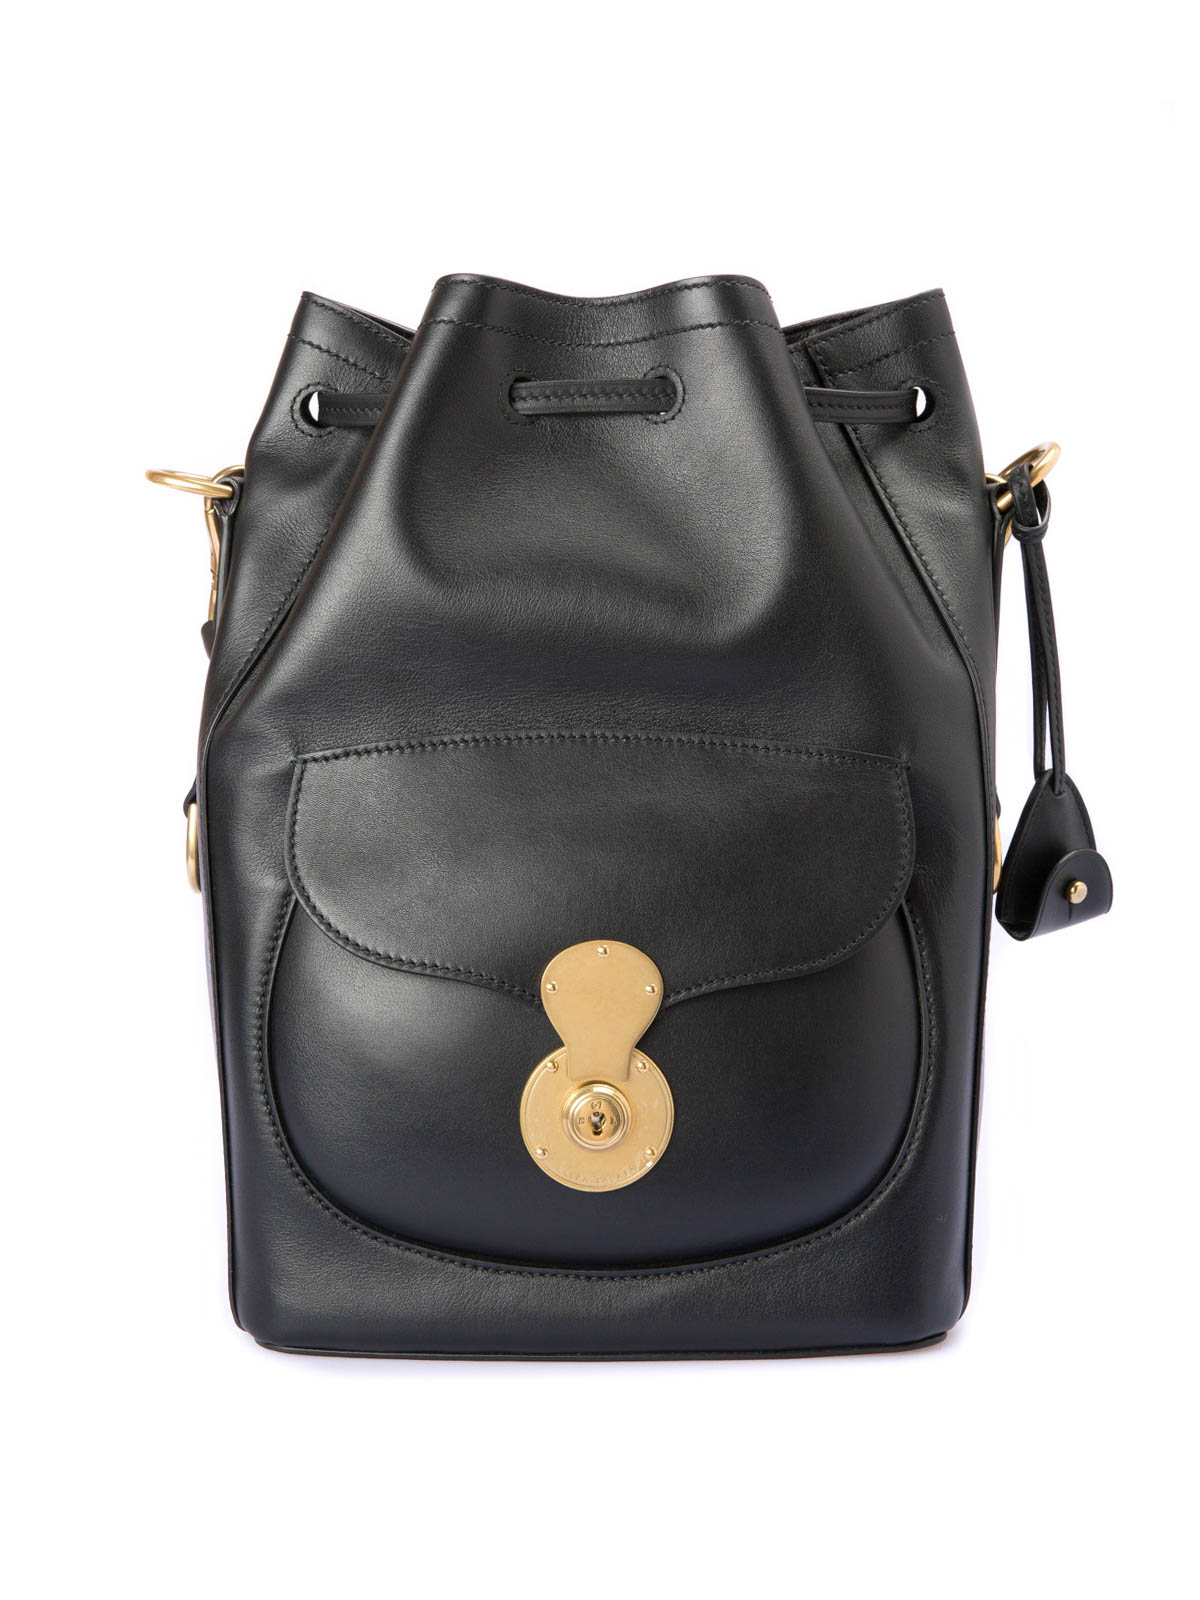 Ralph Lauren Leather Handle Bag - Neutrals Handle Bags, Handbags -  WYG103970 | The RealReal